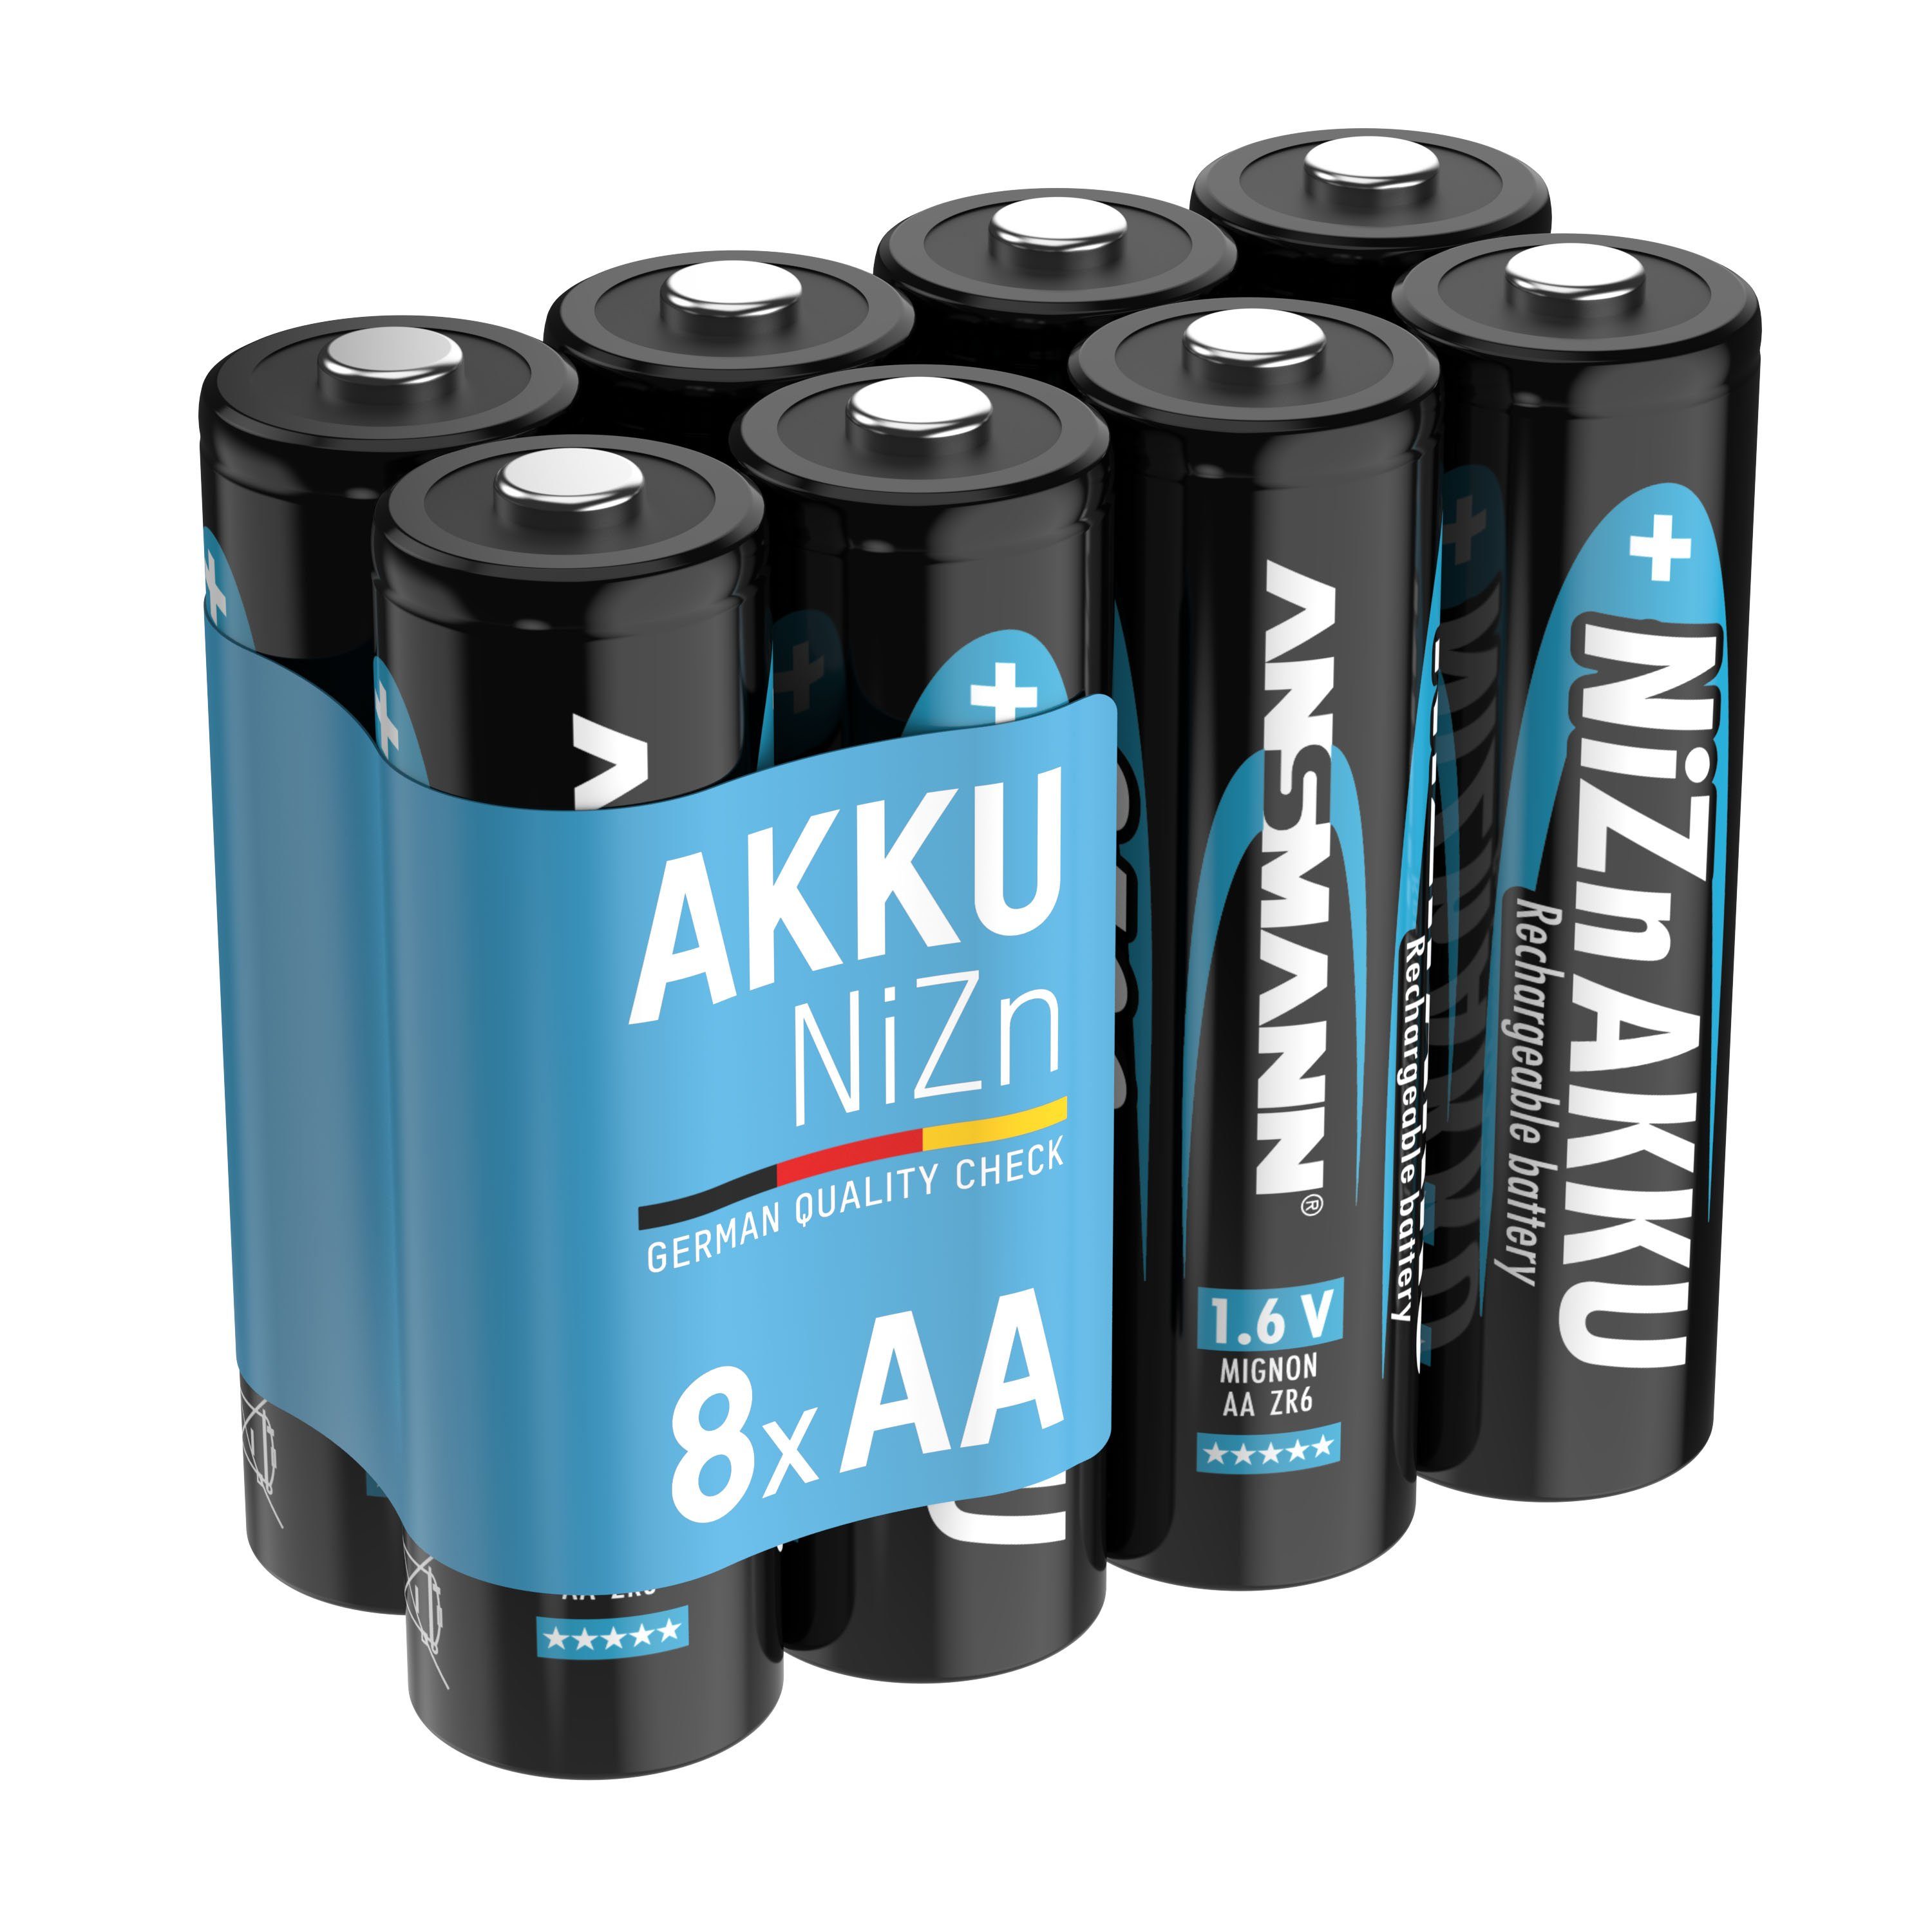 ANSMANN® Mignon NiZn Akku AA 1,6V wiederaufladbare mAh Akku (1.6 V) - 8 1600 Stück 2500mWh, Batterien